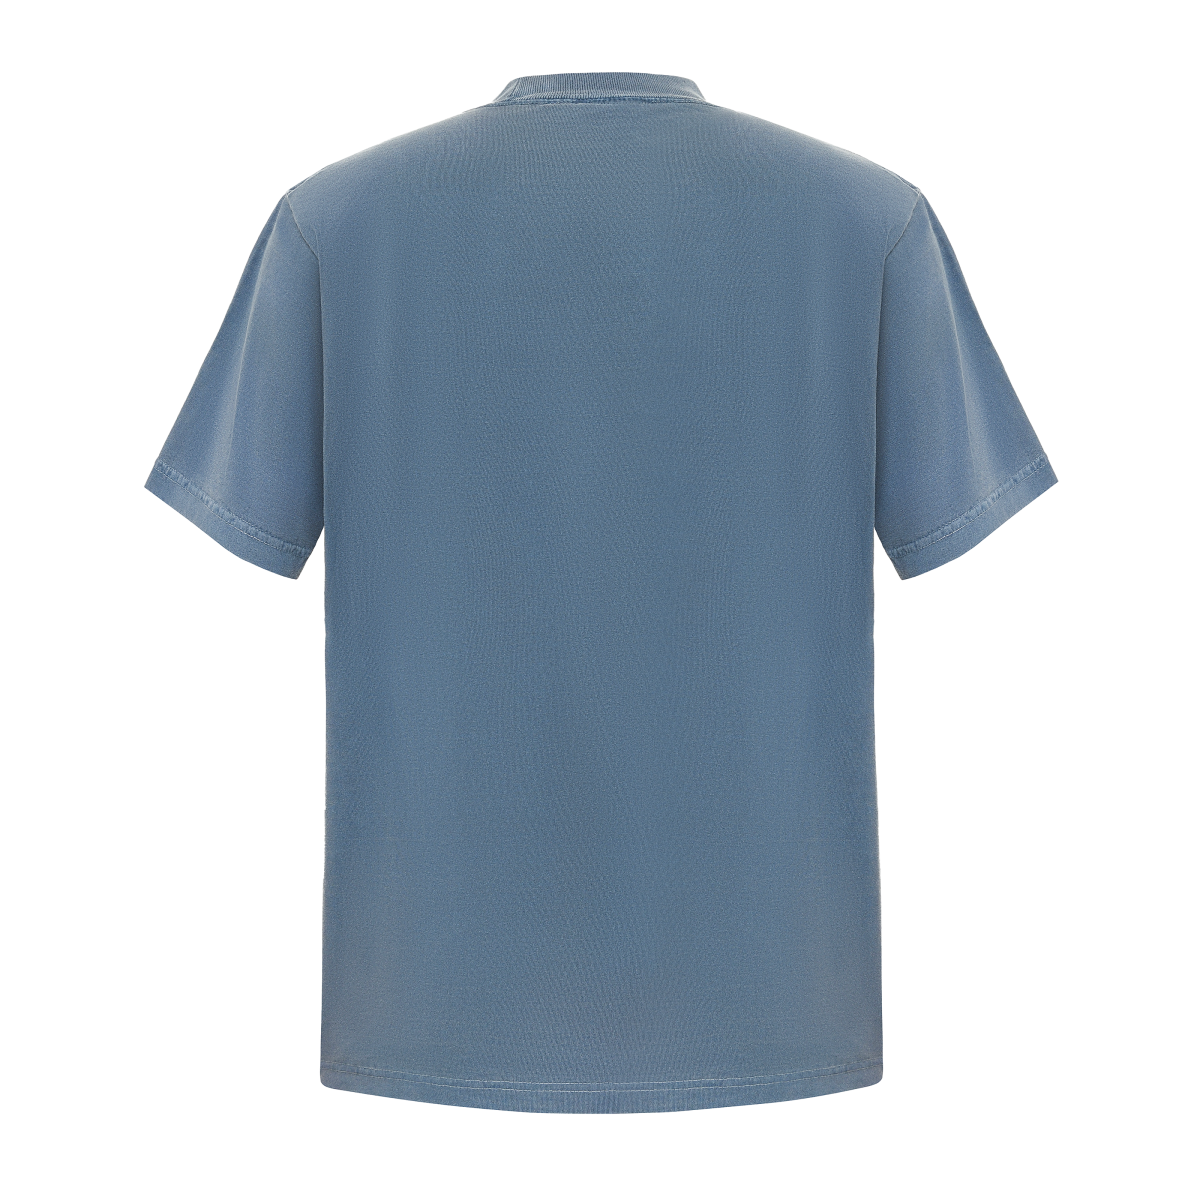 Garment Dye T-Shirt - Standard Size - Washed Denim